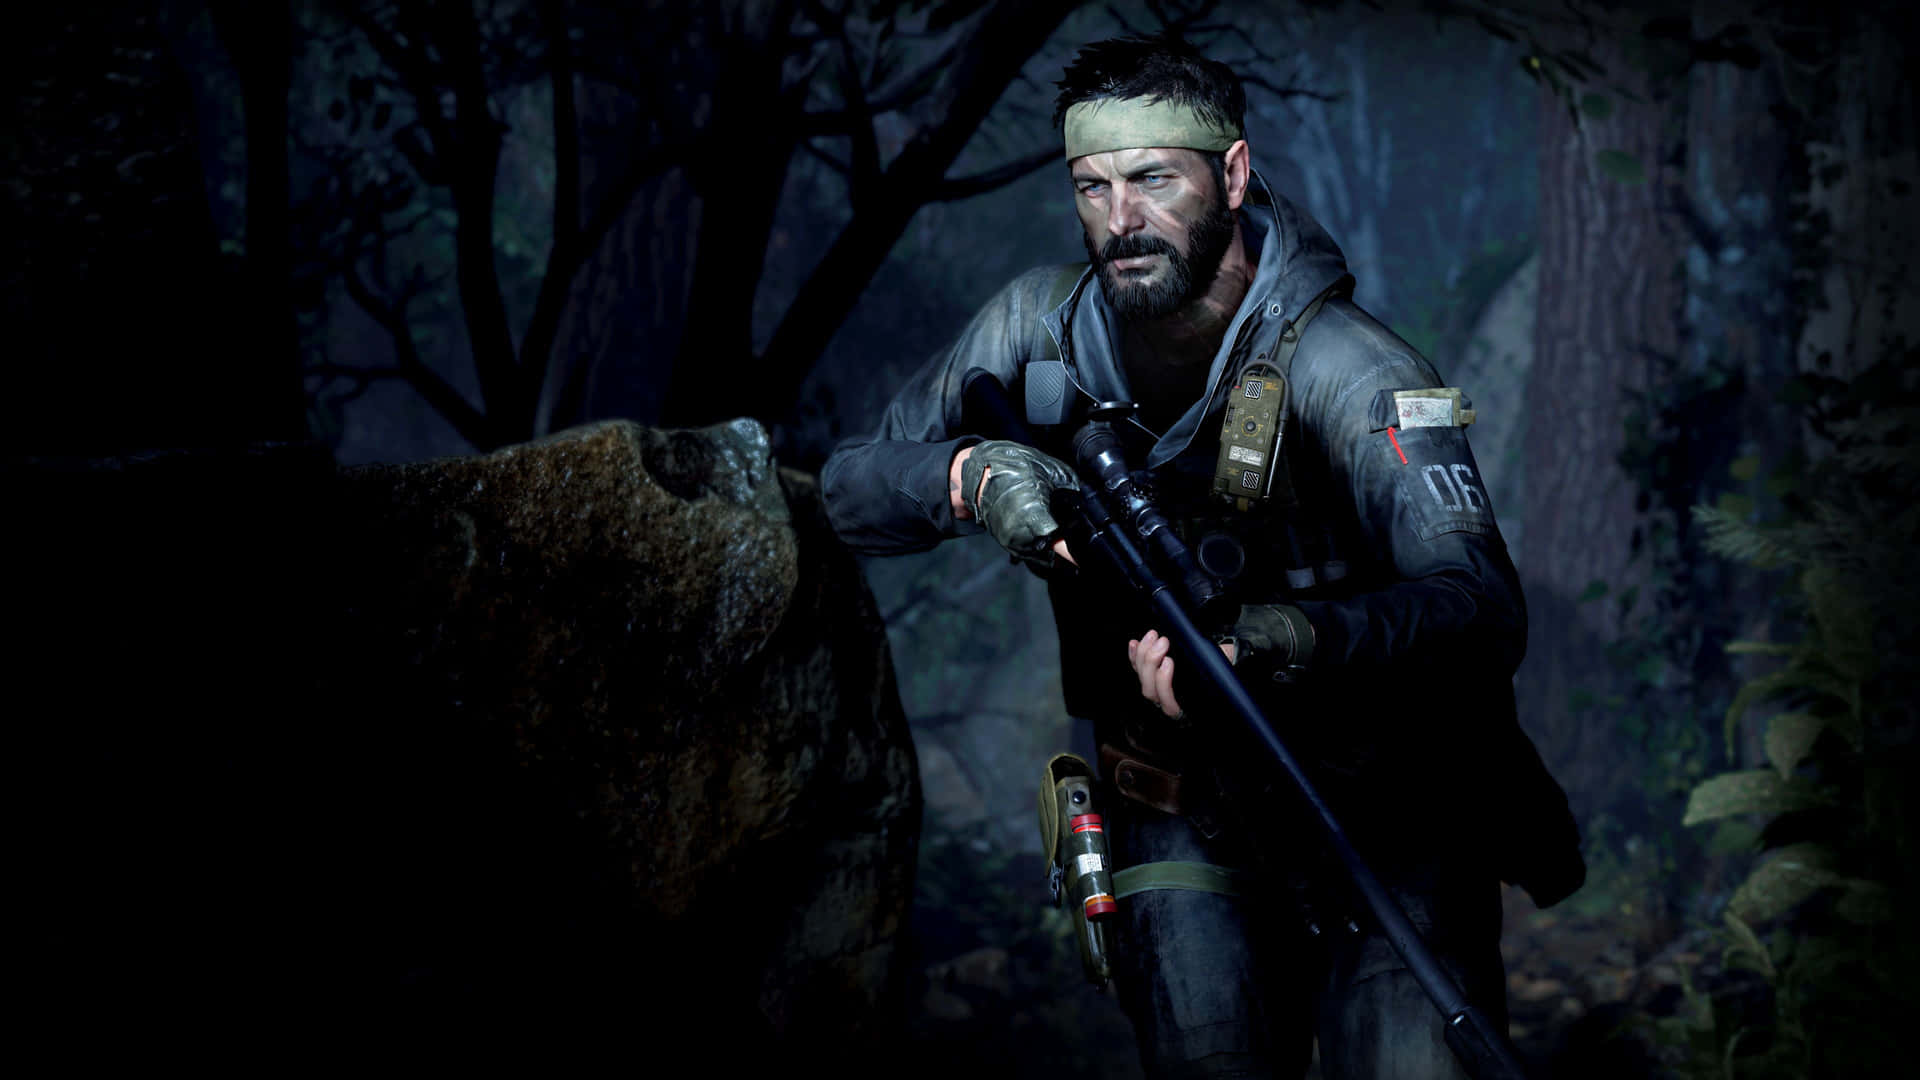 Hintergrundbildfür Das Scharfschützengewehr Hd Call Of Duty Black Ops Cold War